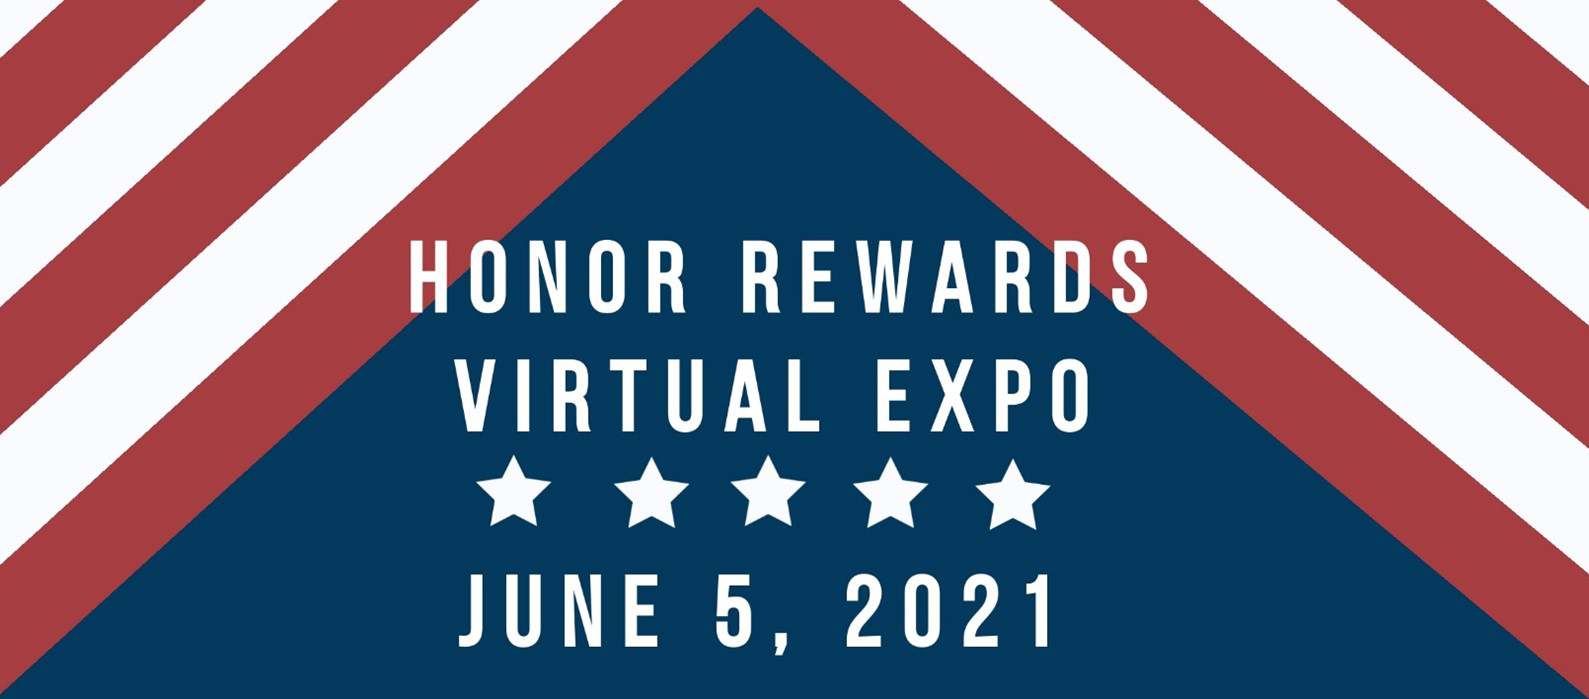 Honor Rewards Virtual Expo - June 5, 2021